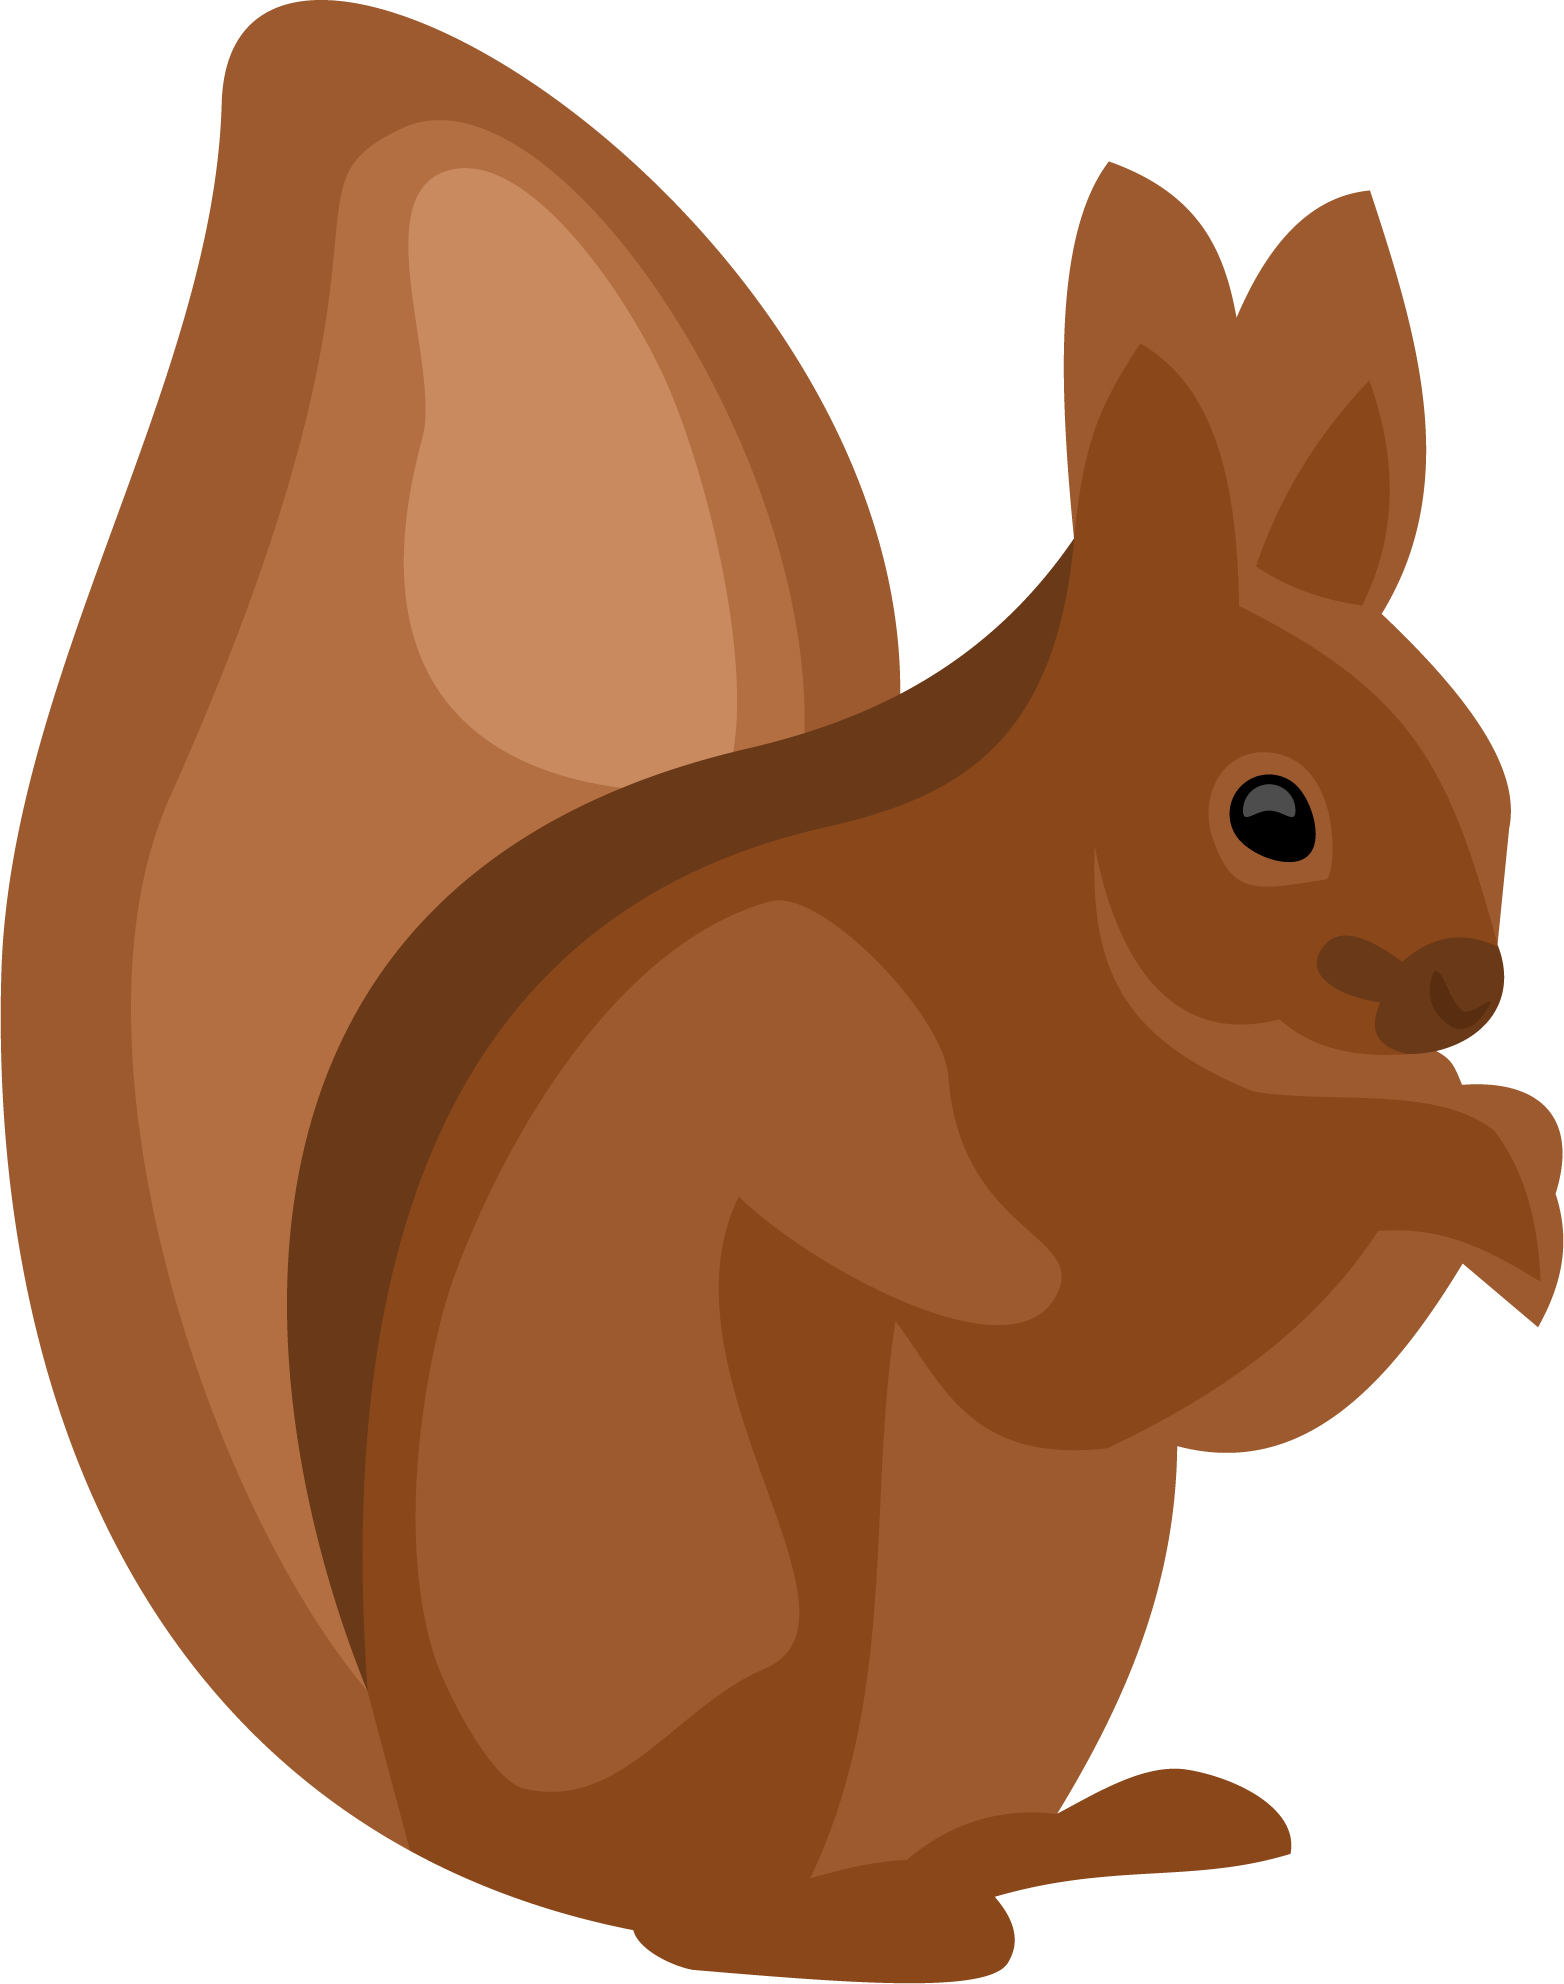 Squirrel Chipmunk Domestic rabbit Cartoon - Vector cartoon squirrel png ...